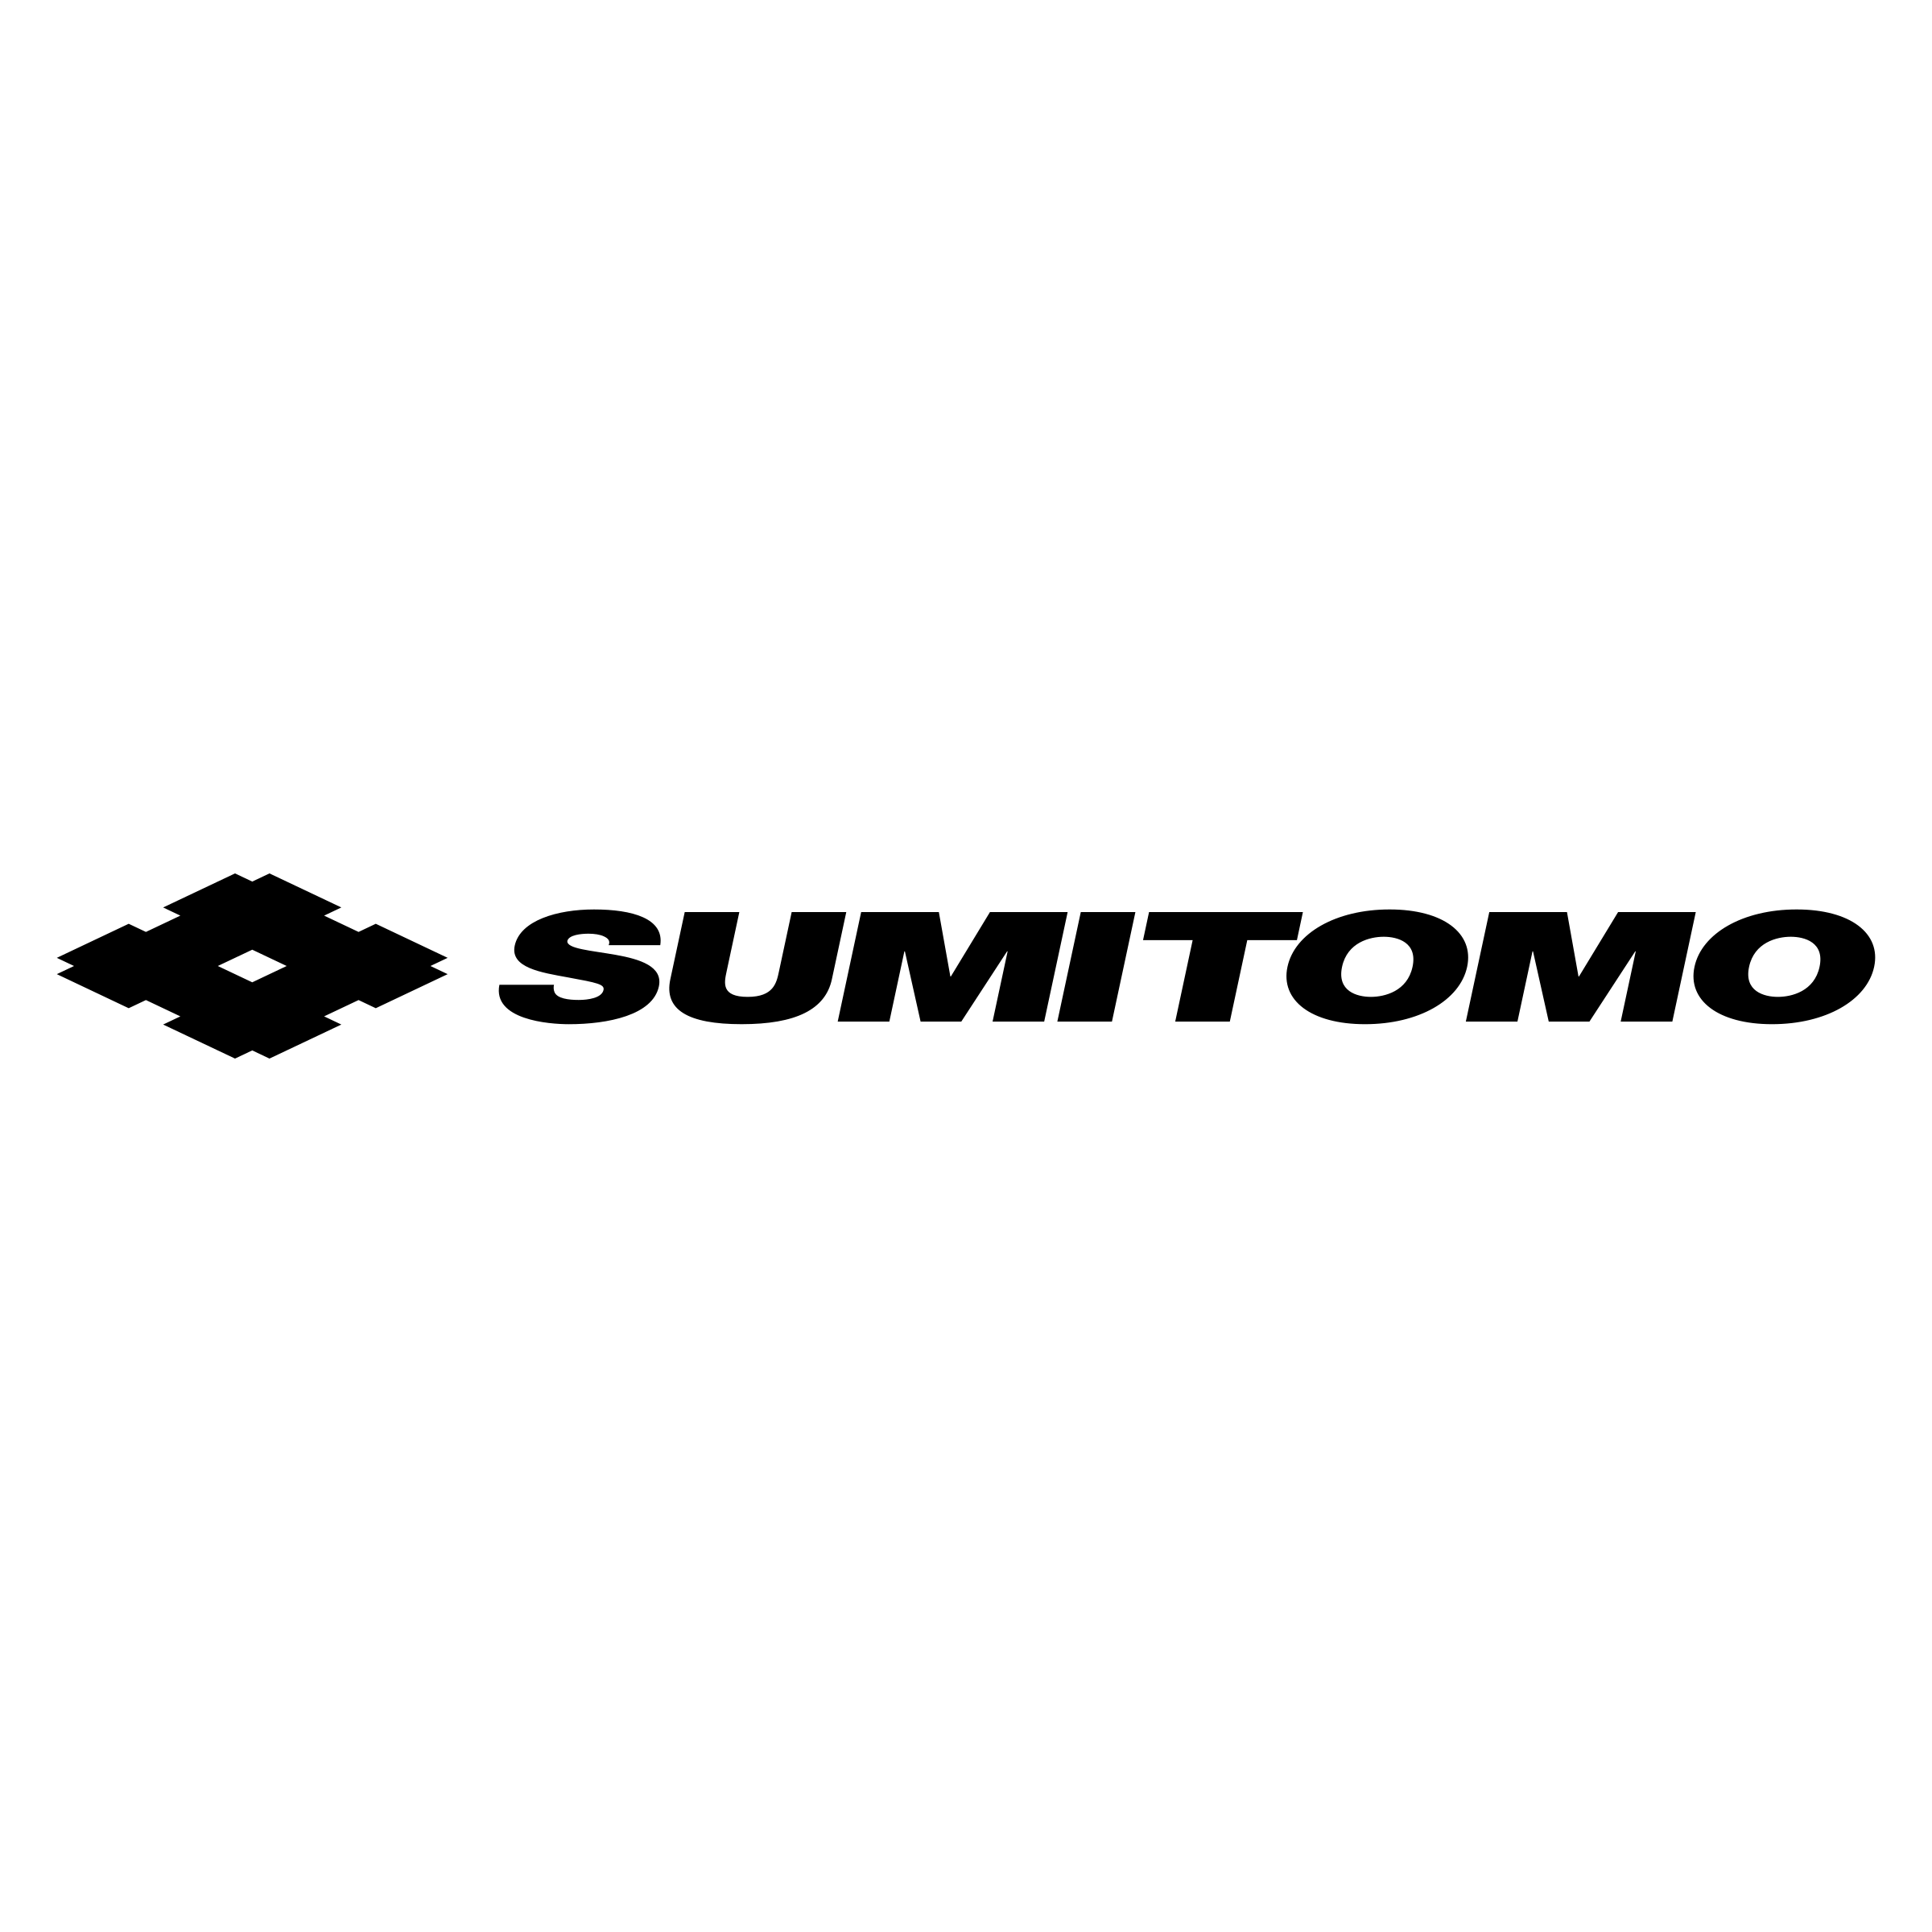 Sumitomo Logo - Sumitomo Logo PNG Transparent & SVG Vector